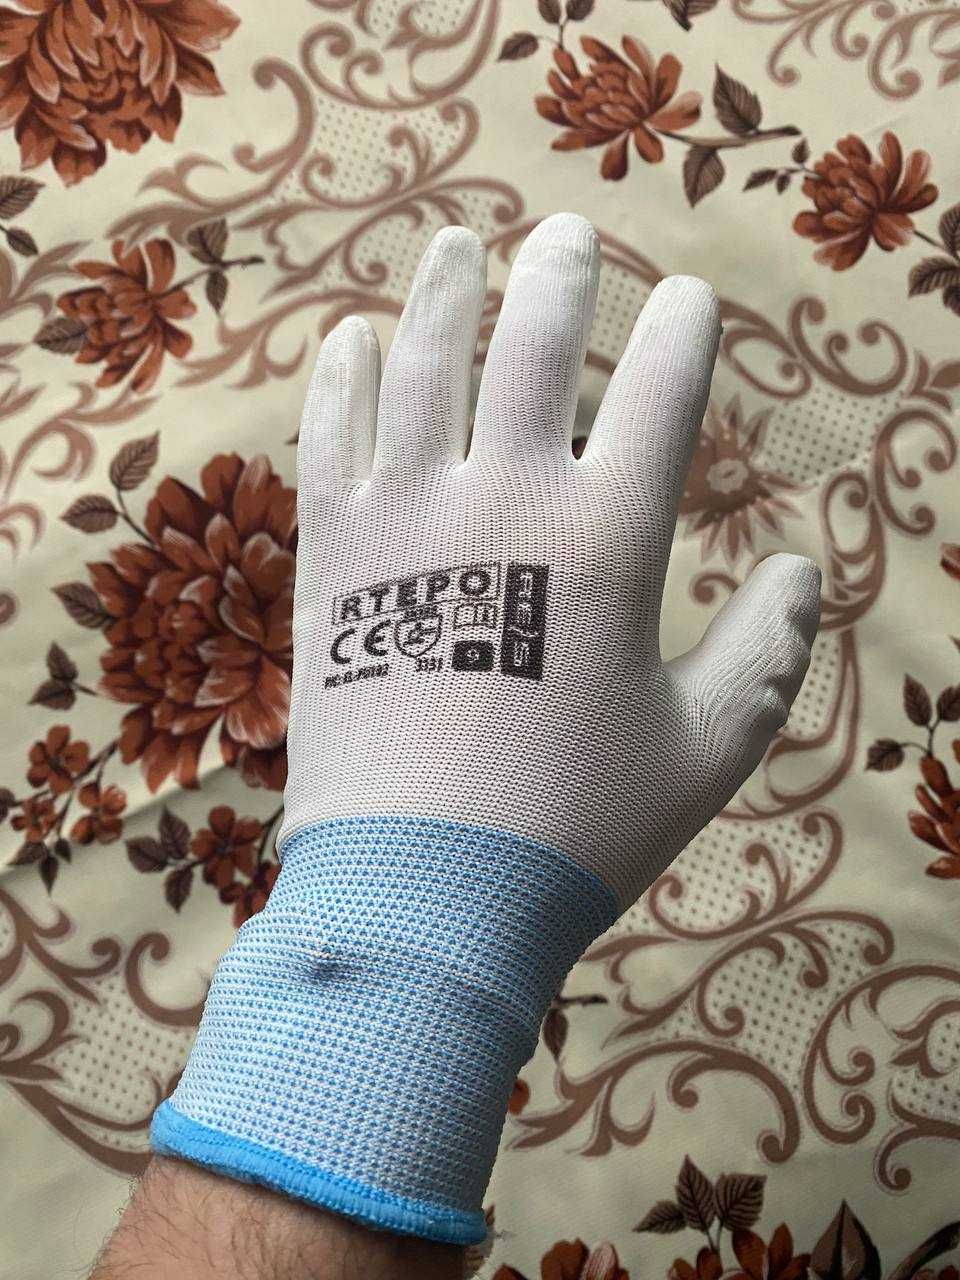 Робочі рукавиці , рабочие перчатки, спецодяг, спецодежда